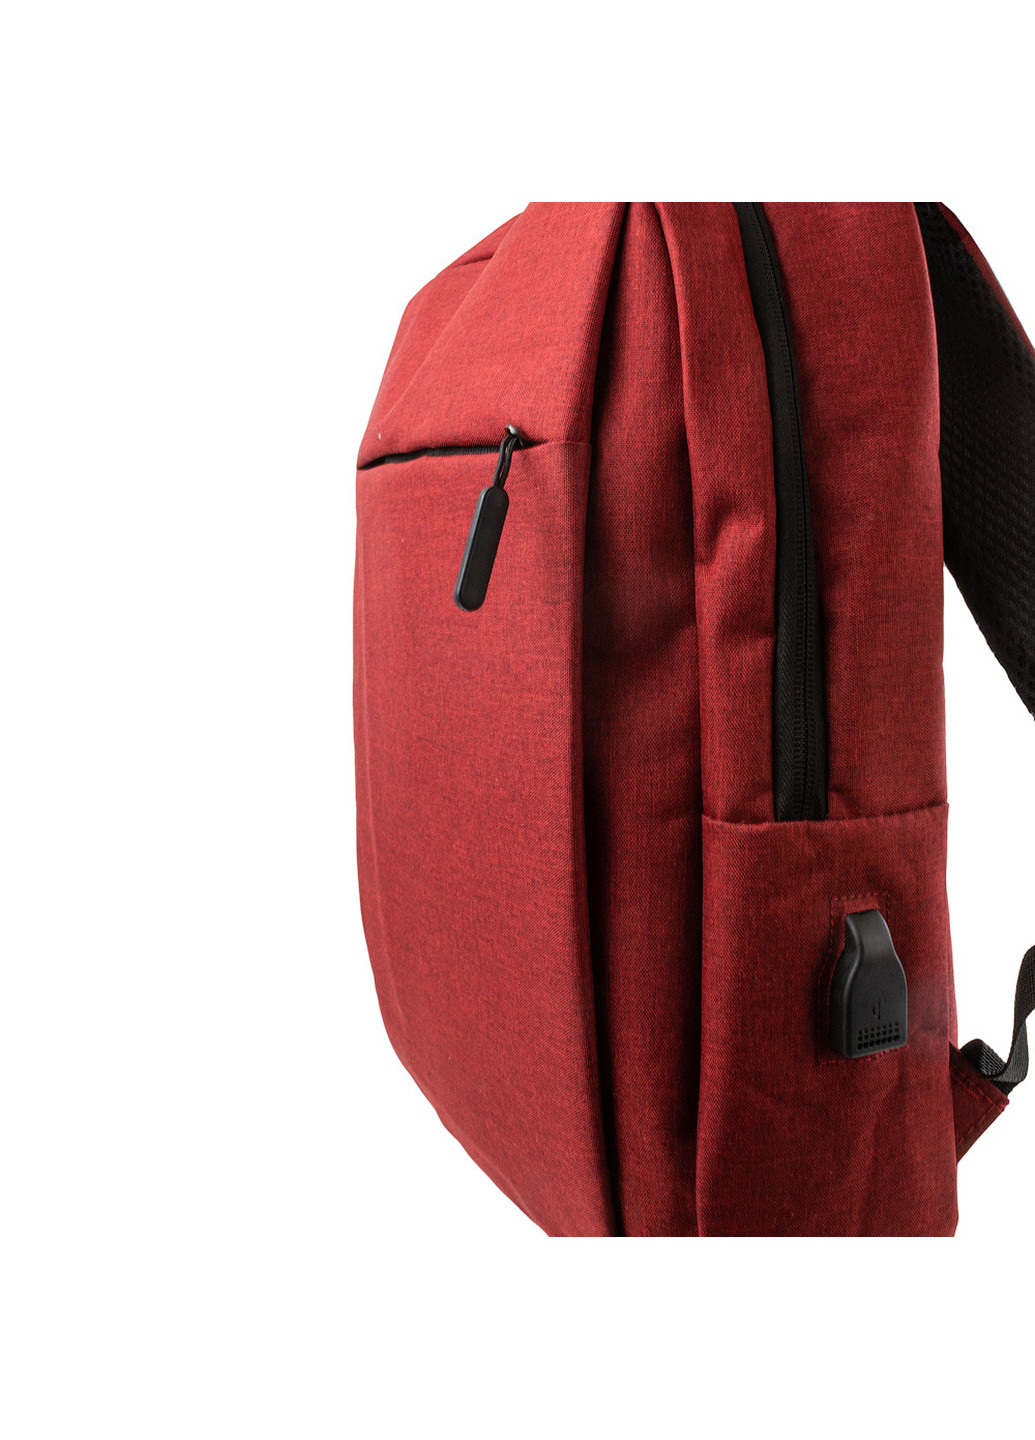 Мужской смарт-рюкзак 28х41х11,5 см Valiria Fashion (253031752)